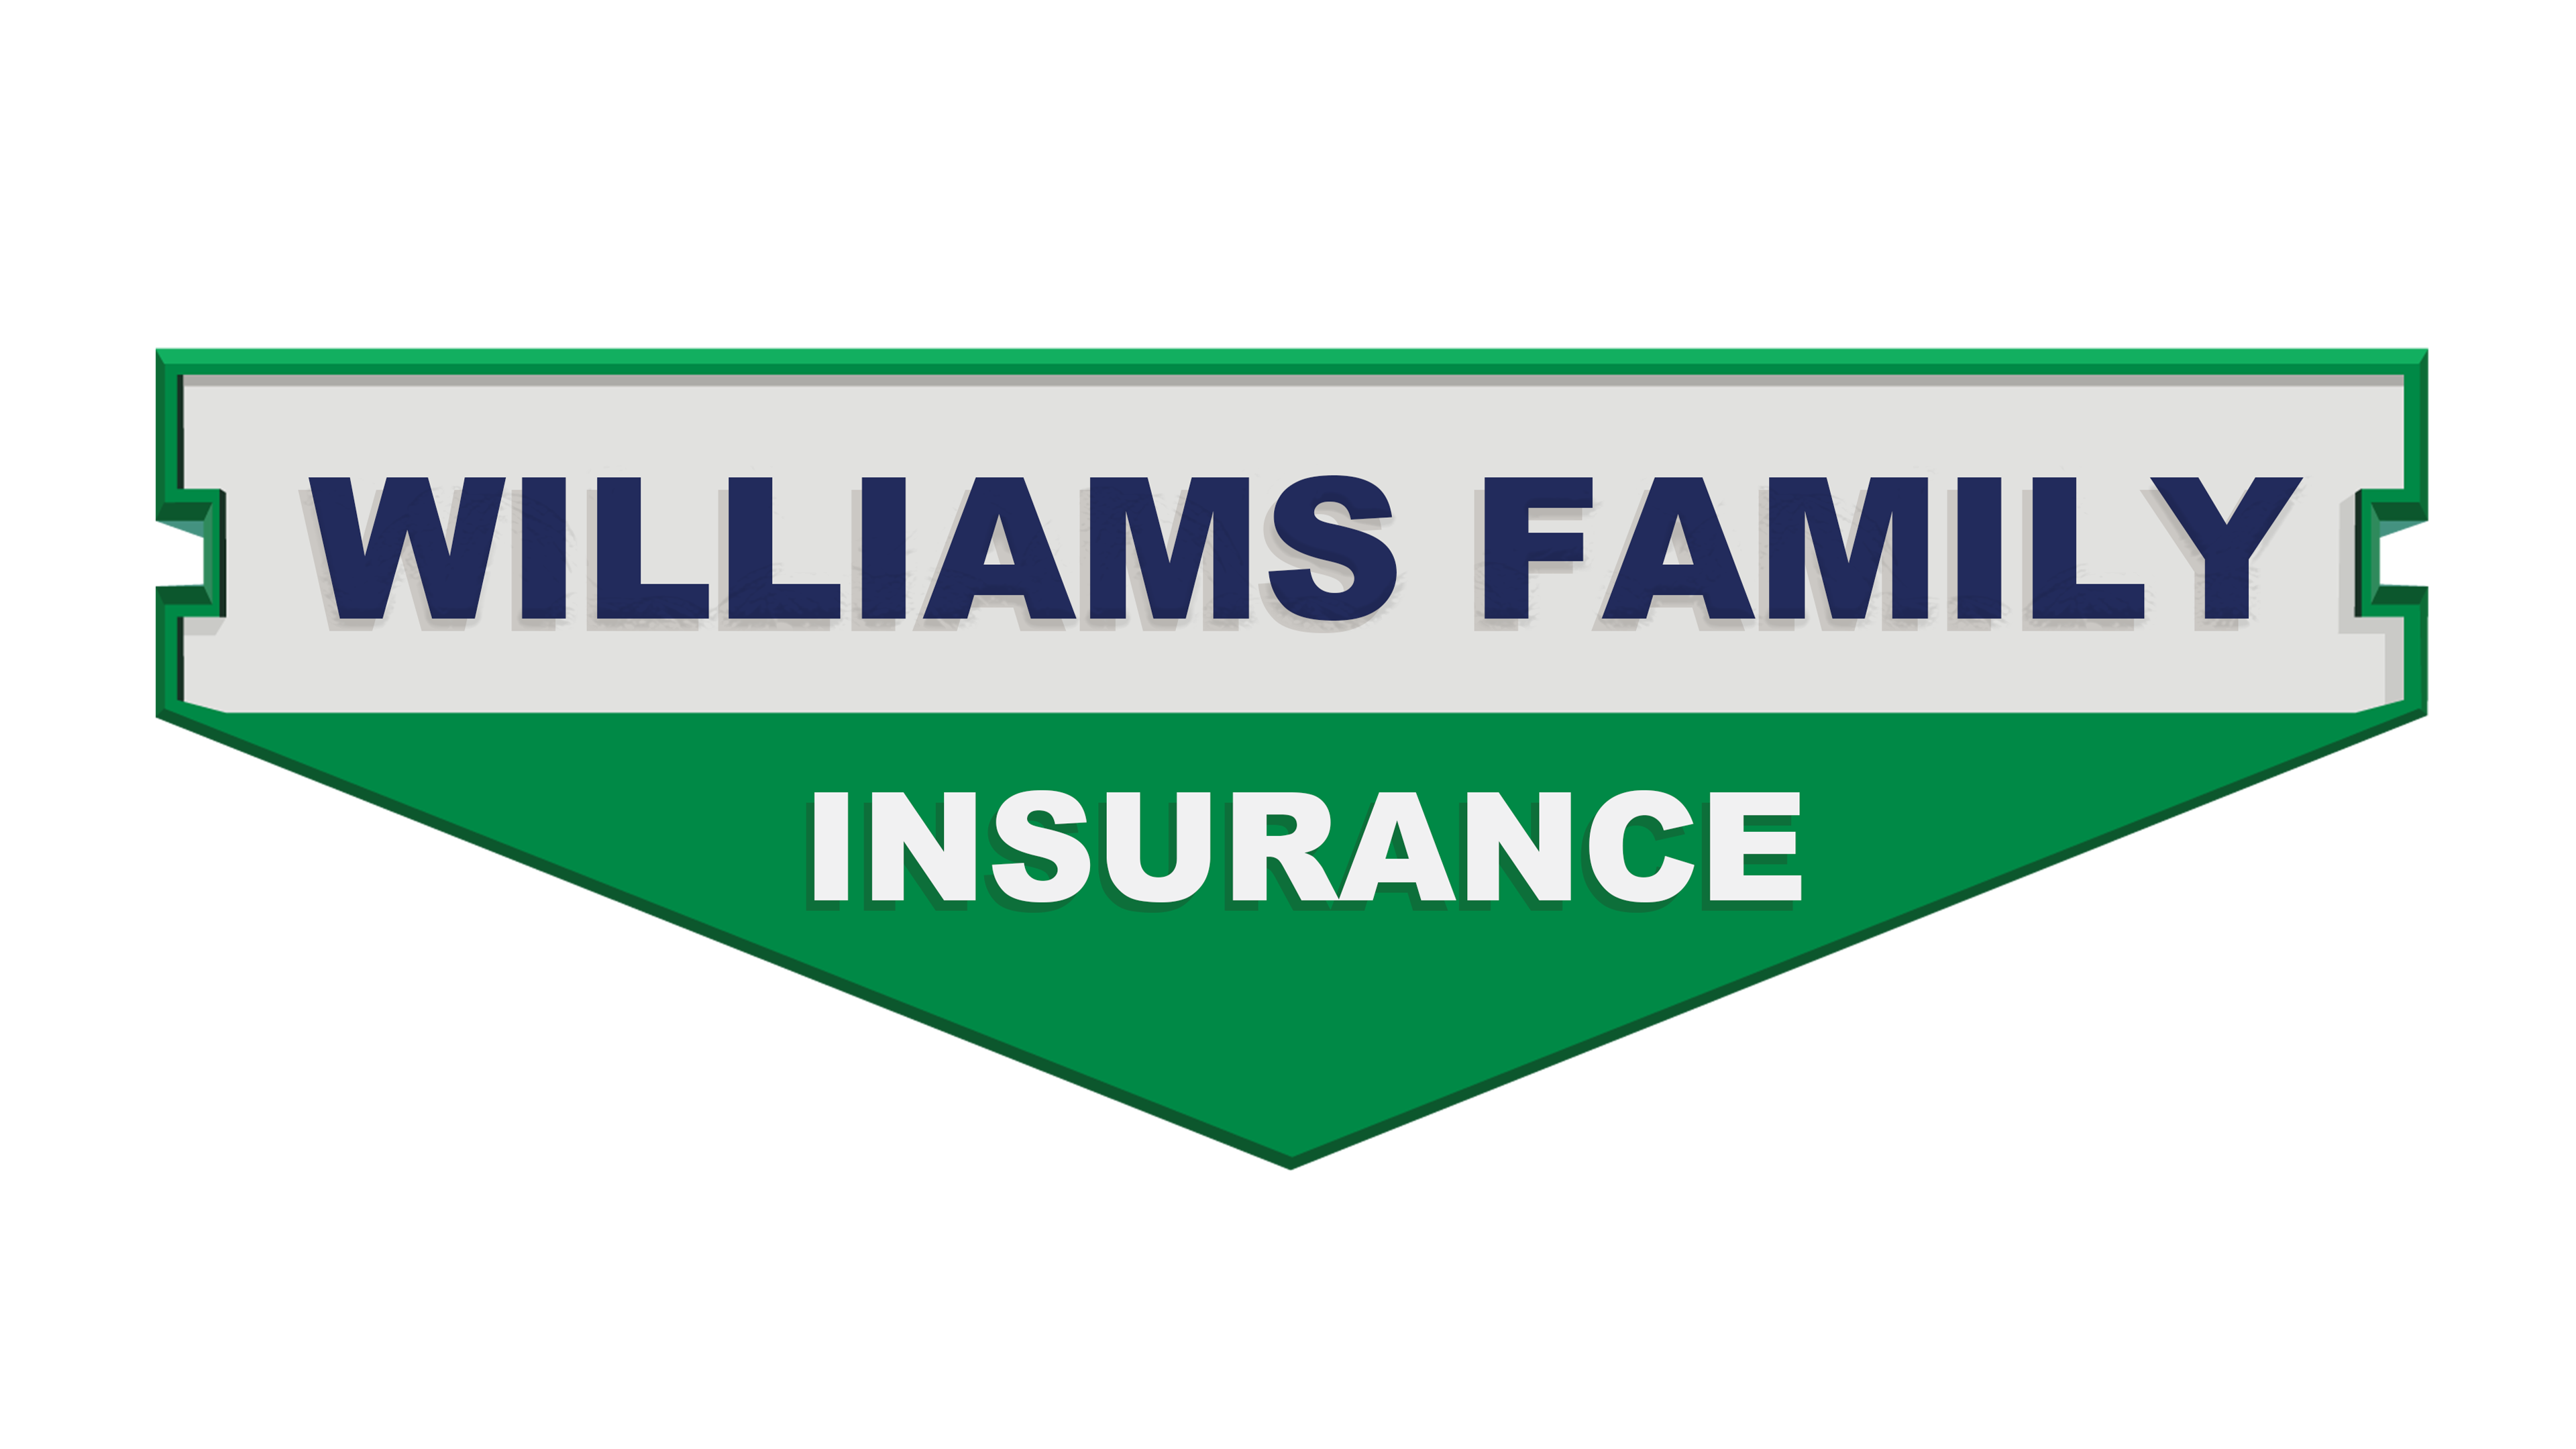 Willams Family Insurance in Mt Orab, OH - Mt Orab Chrysler Dodge Jeep RAM Inc